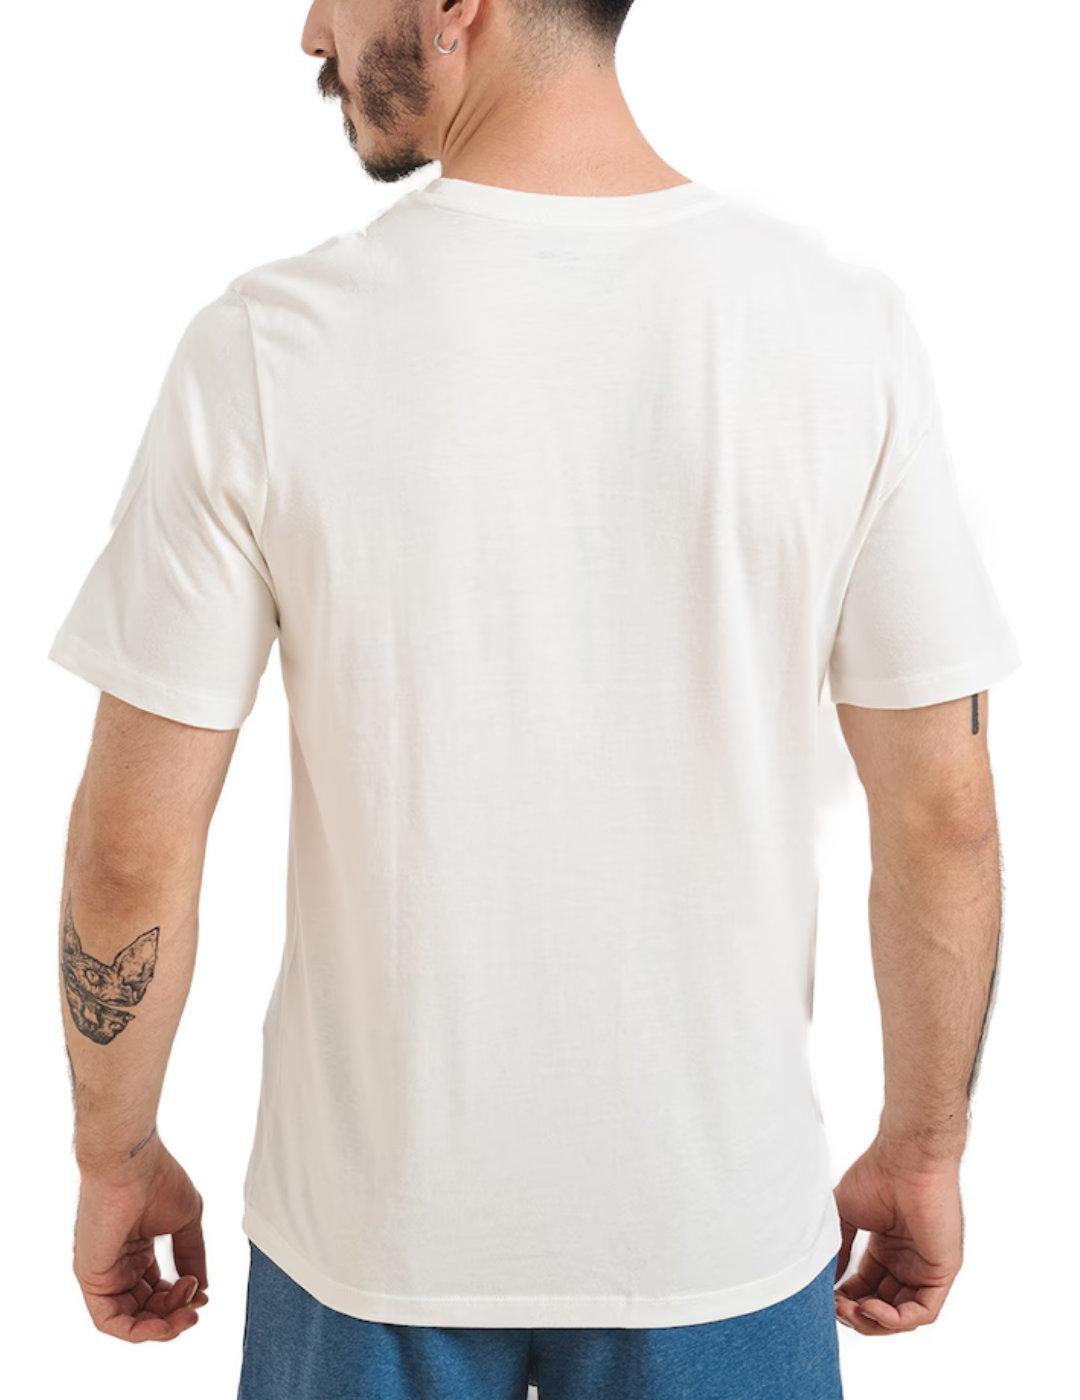 Camiseta Jack&Jones Louie blanca manga corta para hombre